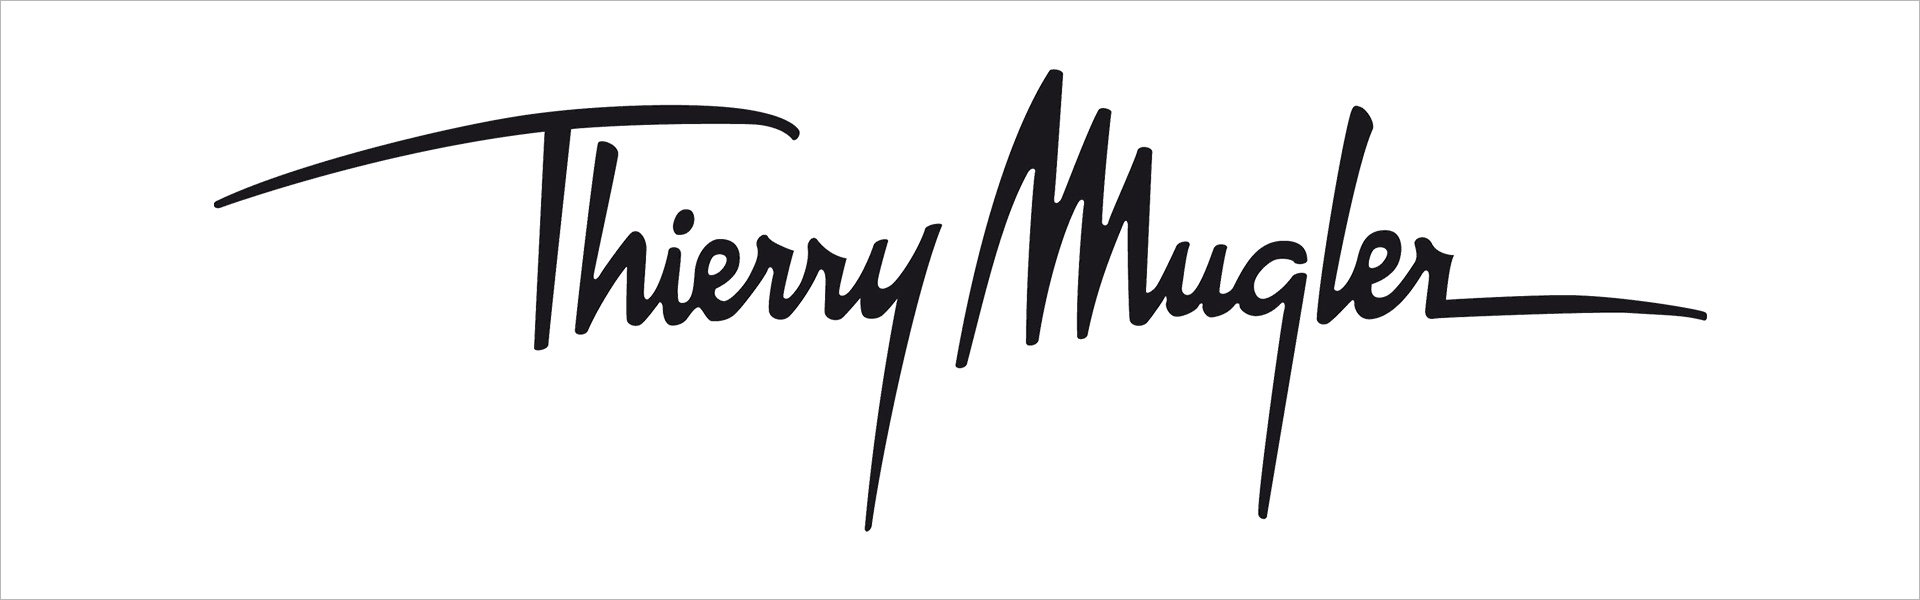 Thierry Mugler Ангел Муза - начинка Thierry Mugler